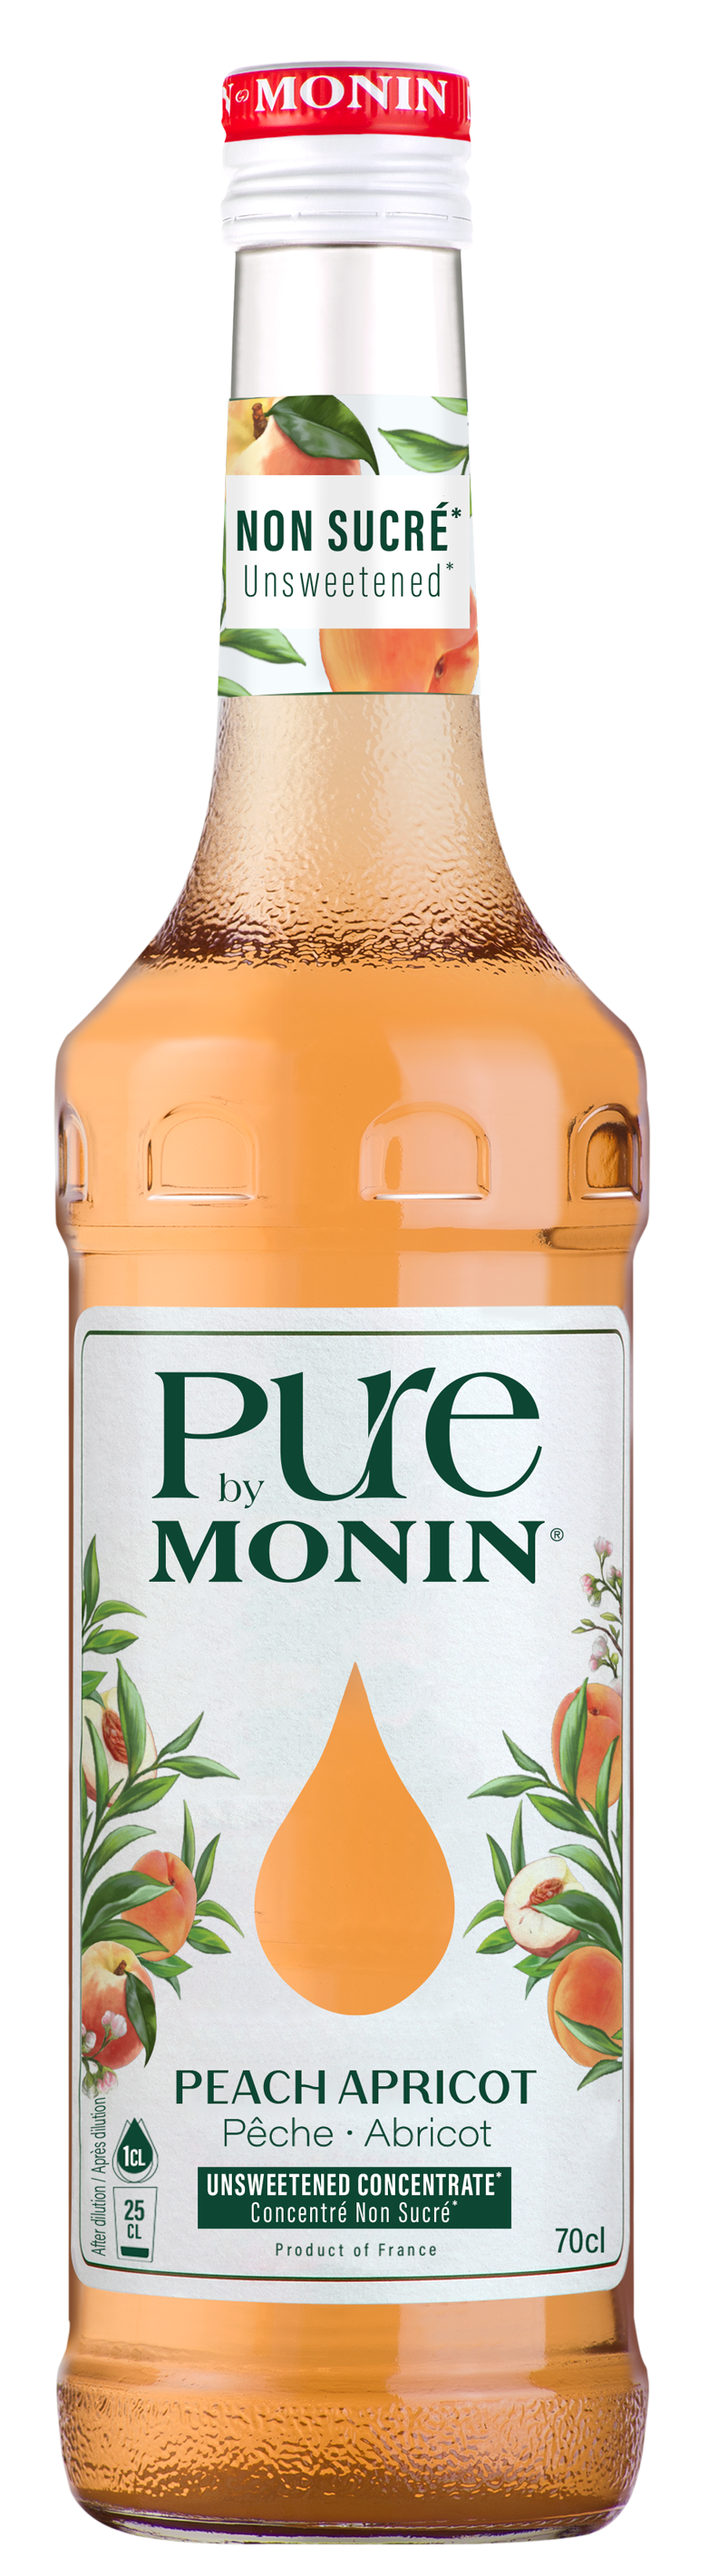 PURE by MONIN Peach Apricot sugar-free concentrate